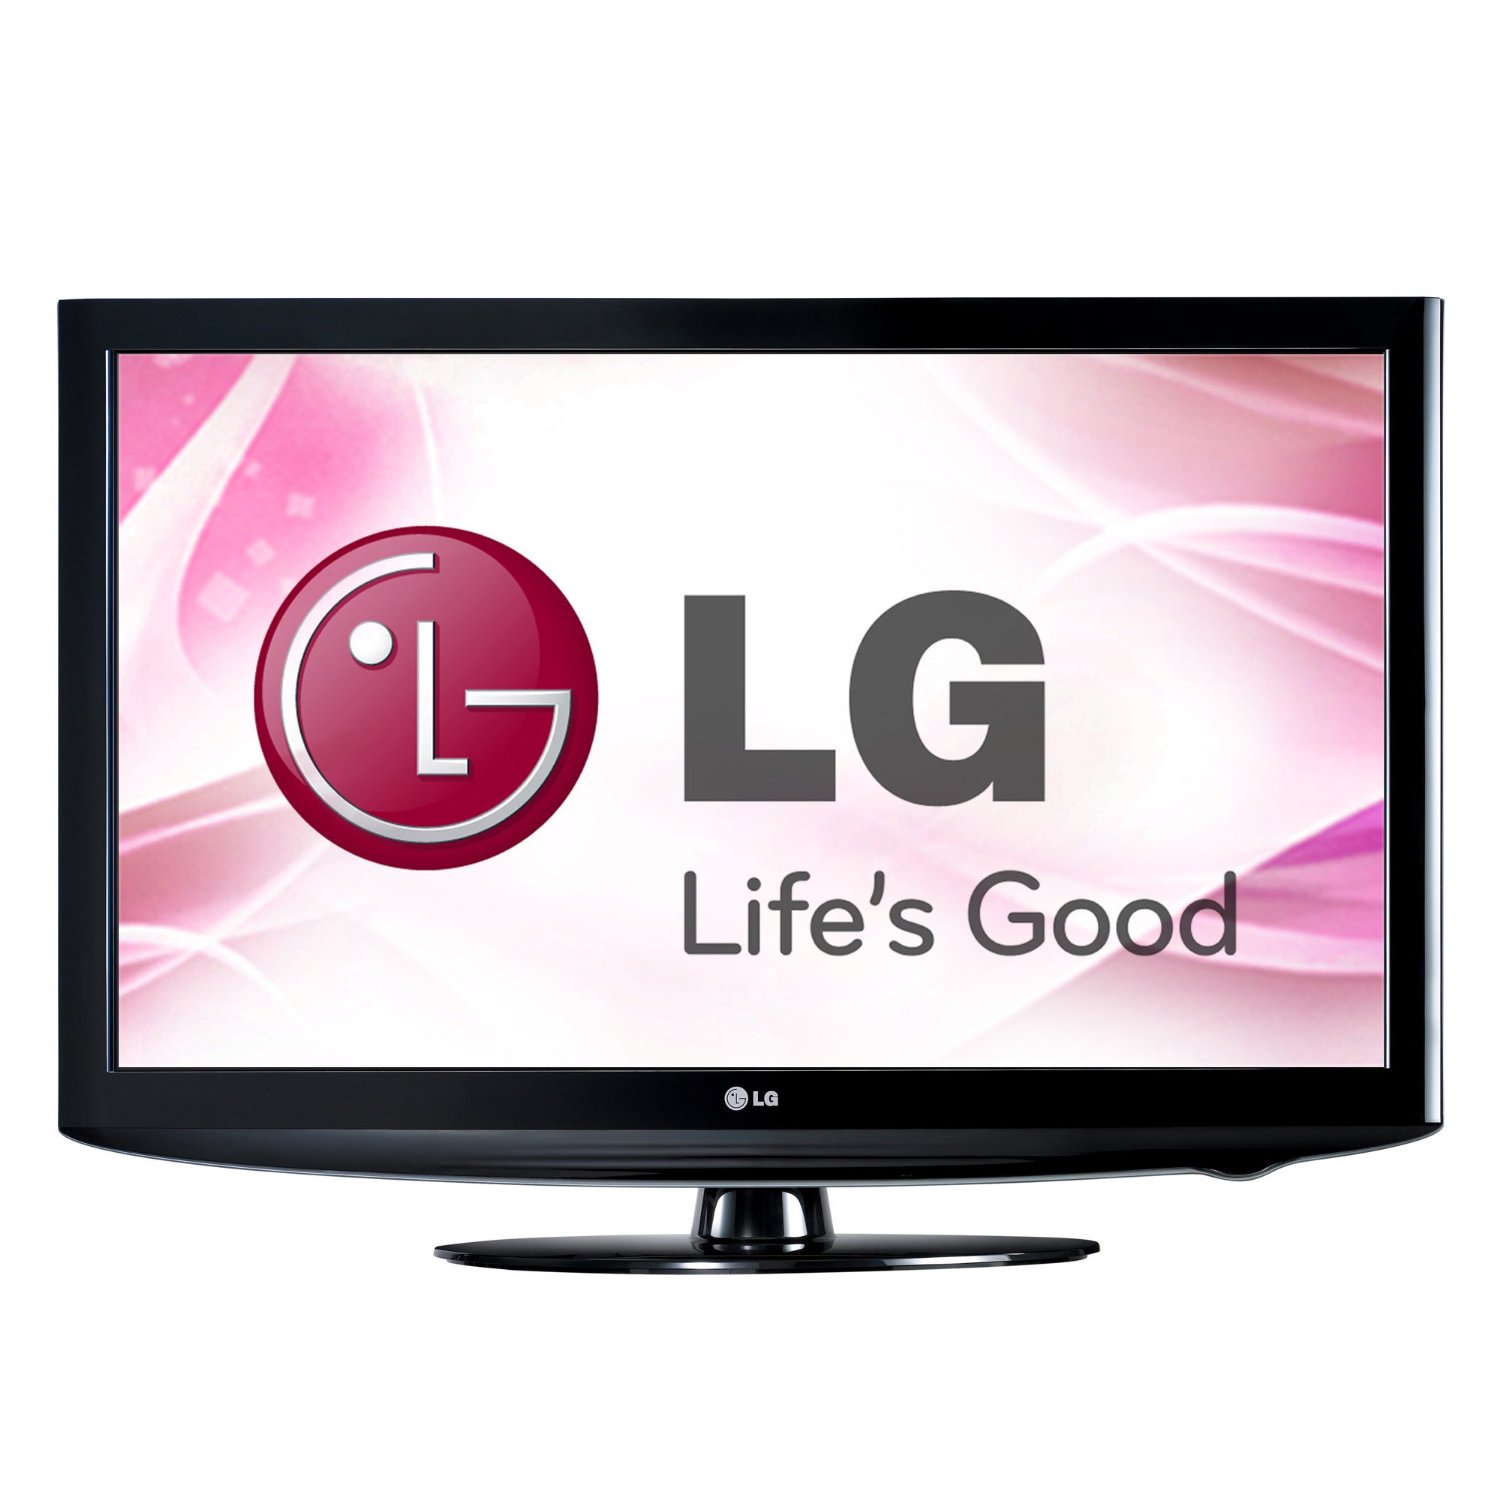 Lg телевизоры плохие. LG lh20. Телевизор LG lg32580s. LG TV 2011. Телевизор LG 32ld455.